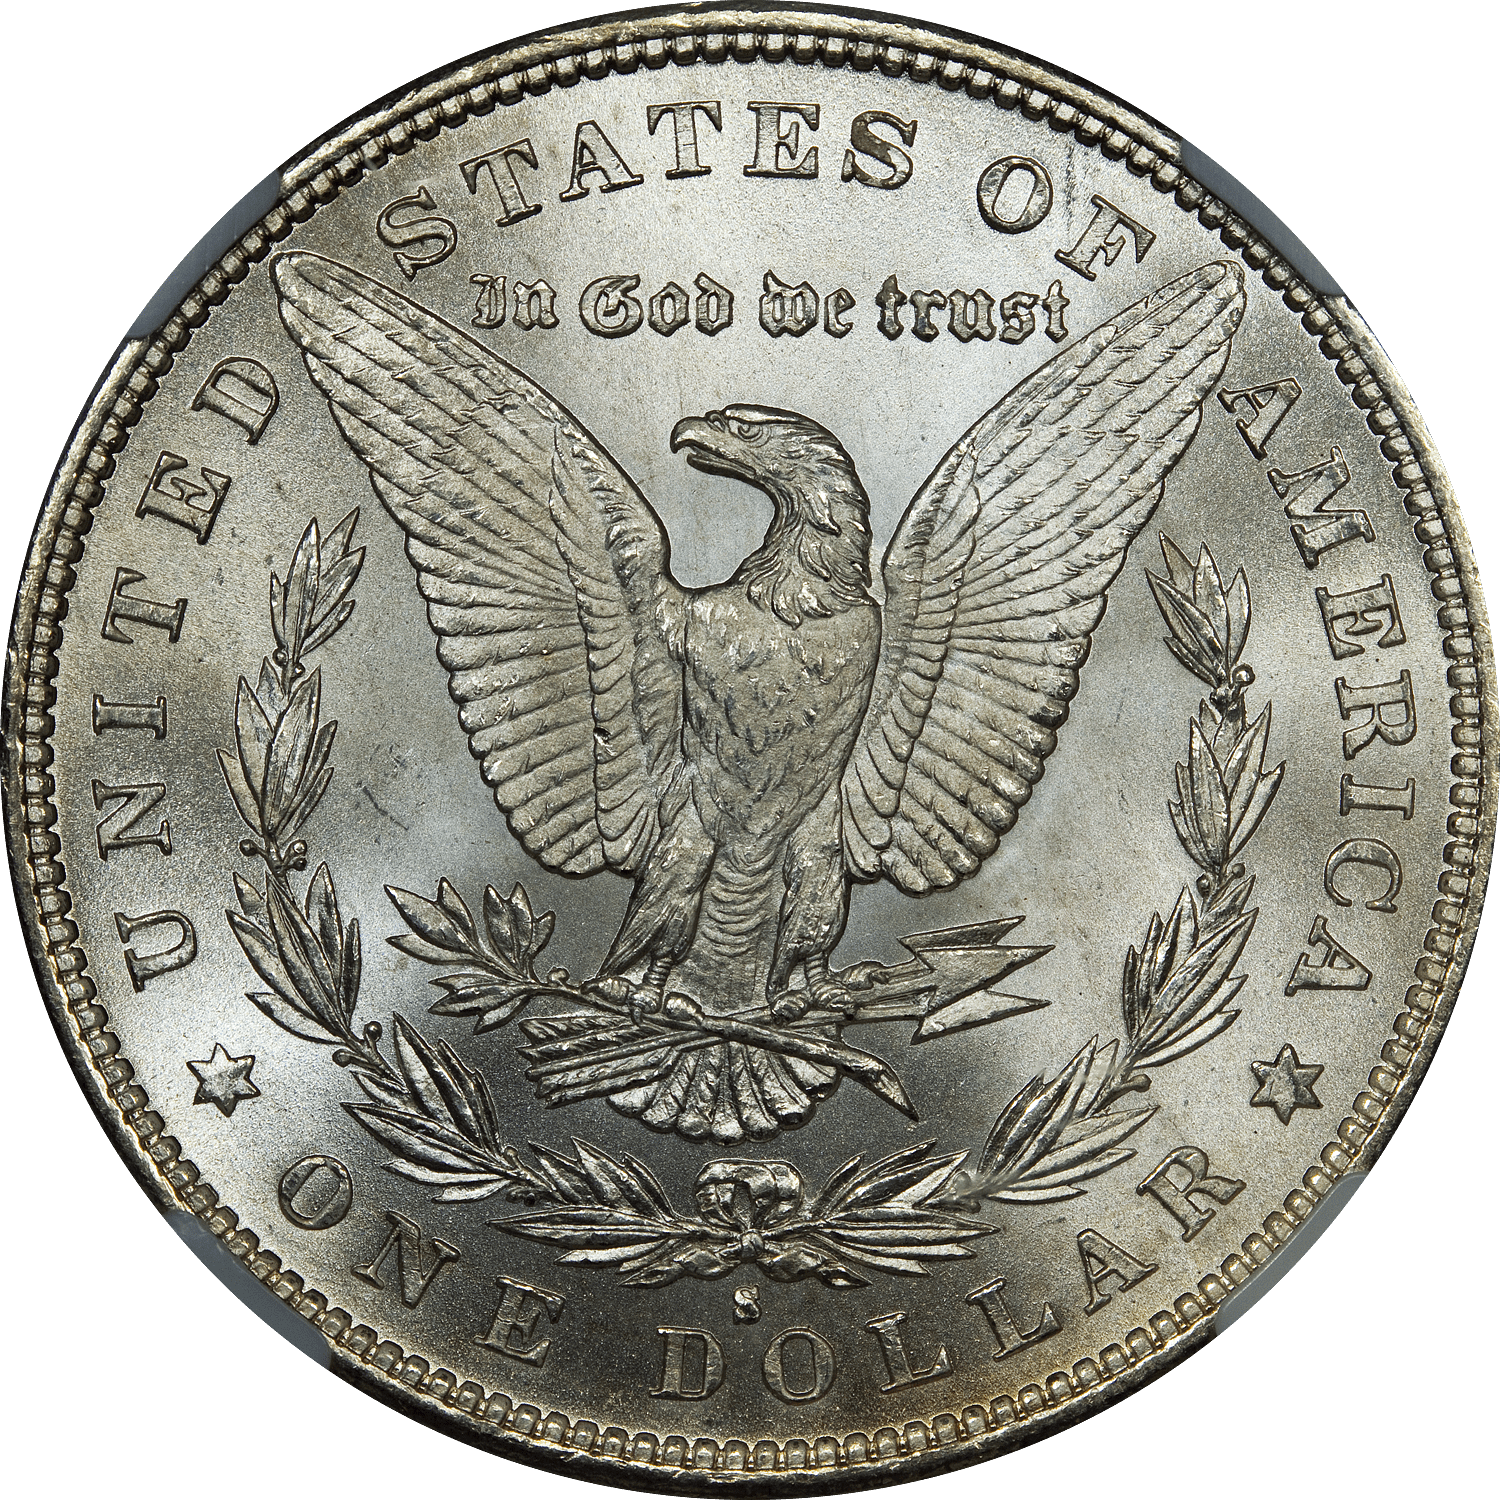 The reverse of the 1888 Morgan silver dollar